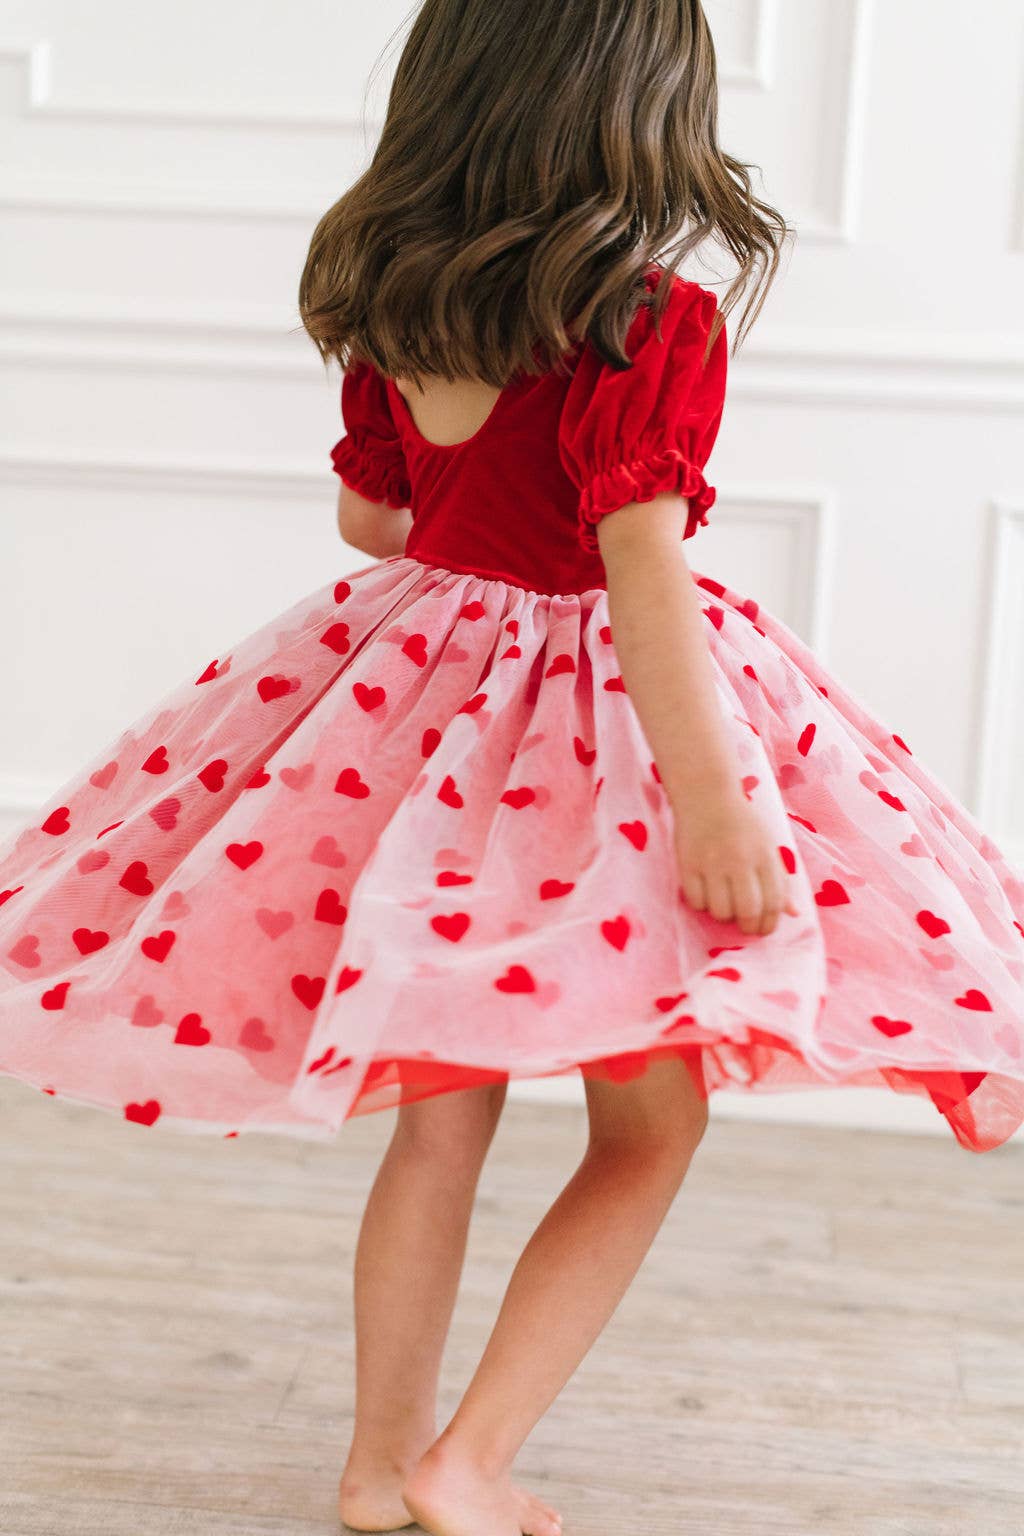 Rose Dress in Valentine